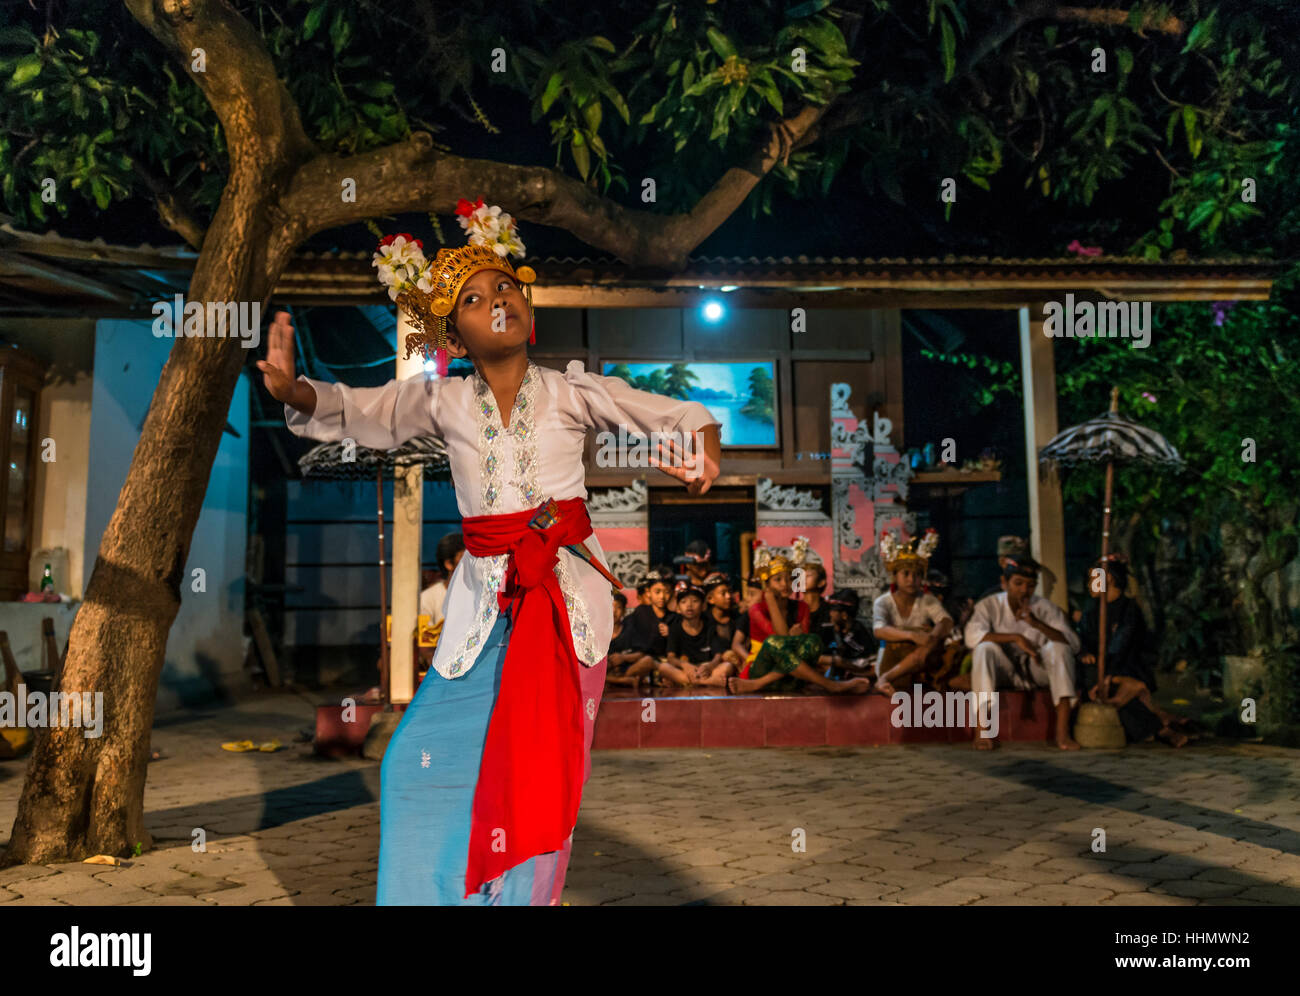 Balinese girl dancing, traditional dance and clothing, Kecamatan Buleleng, Bali, Indonesia Stock Photo